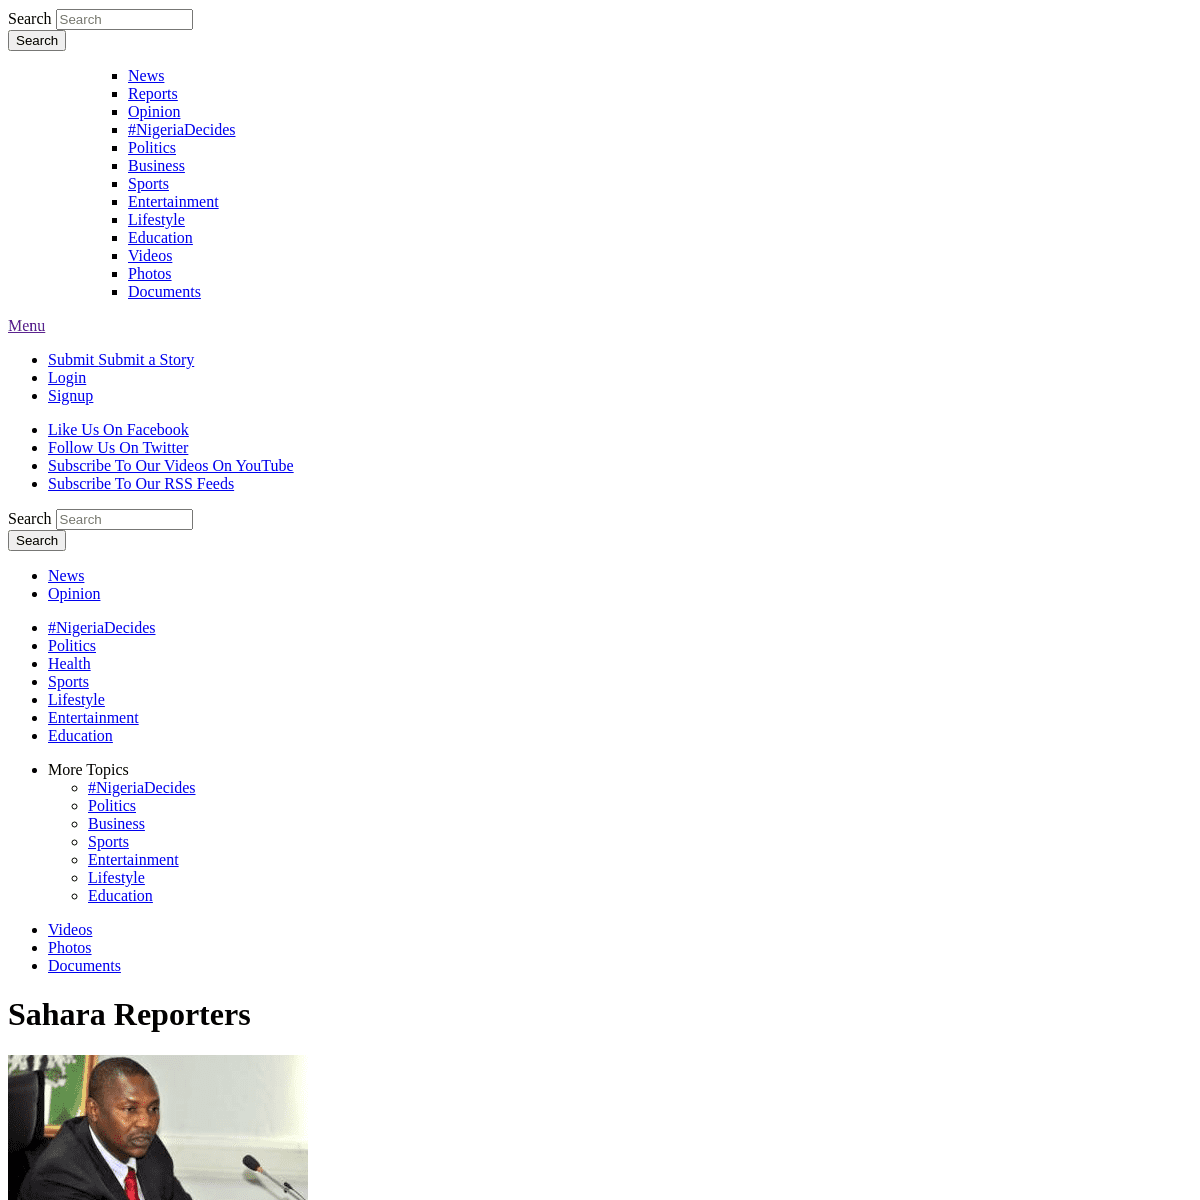 A complete backup of https://saharareporters.com